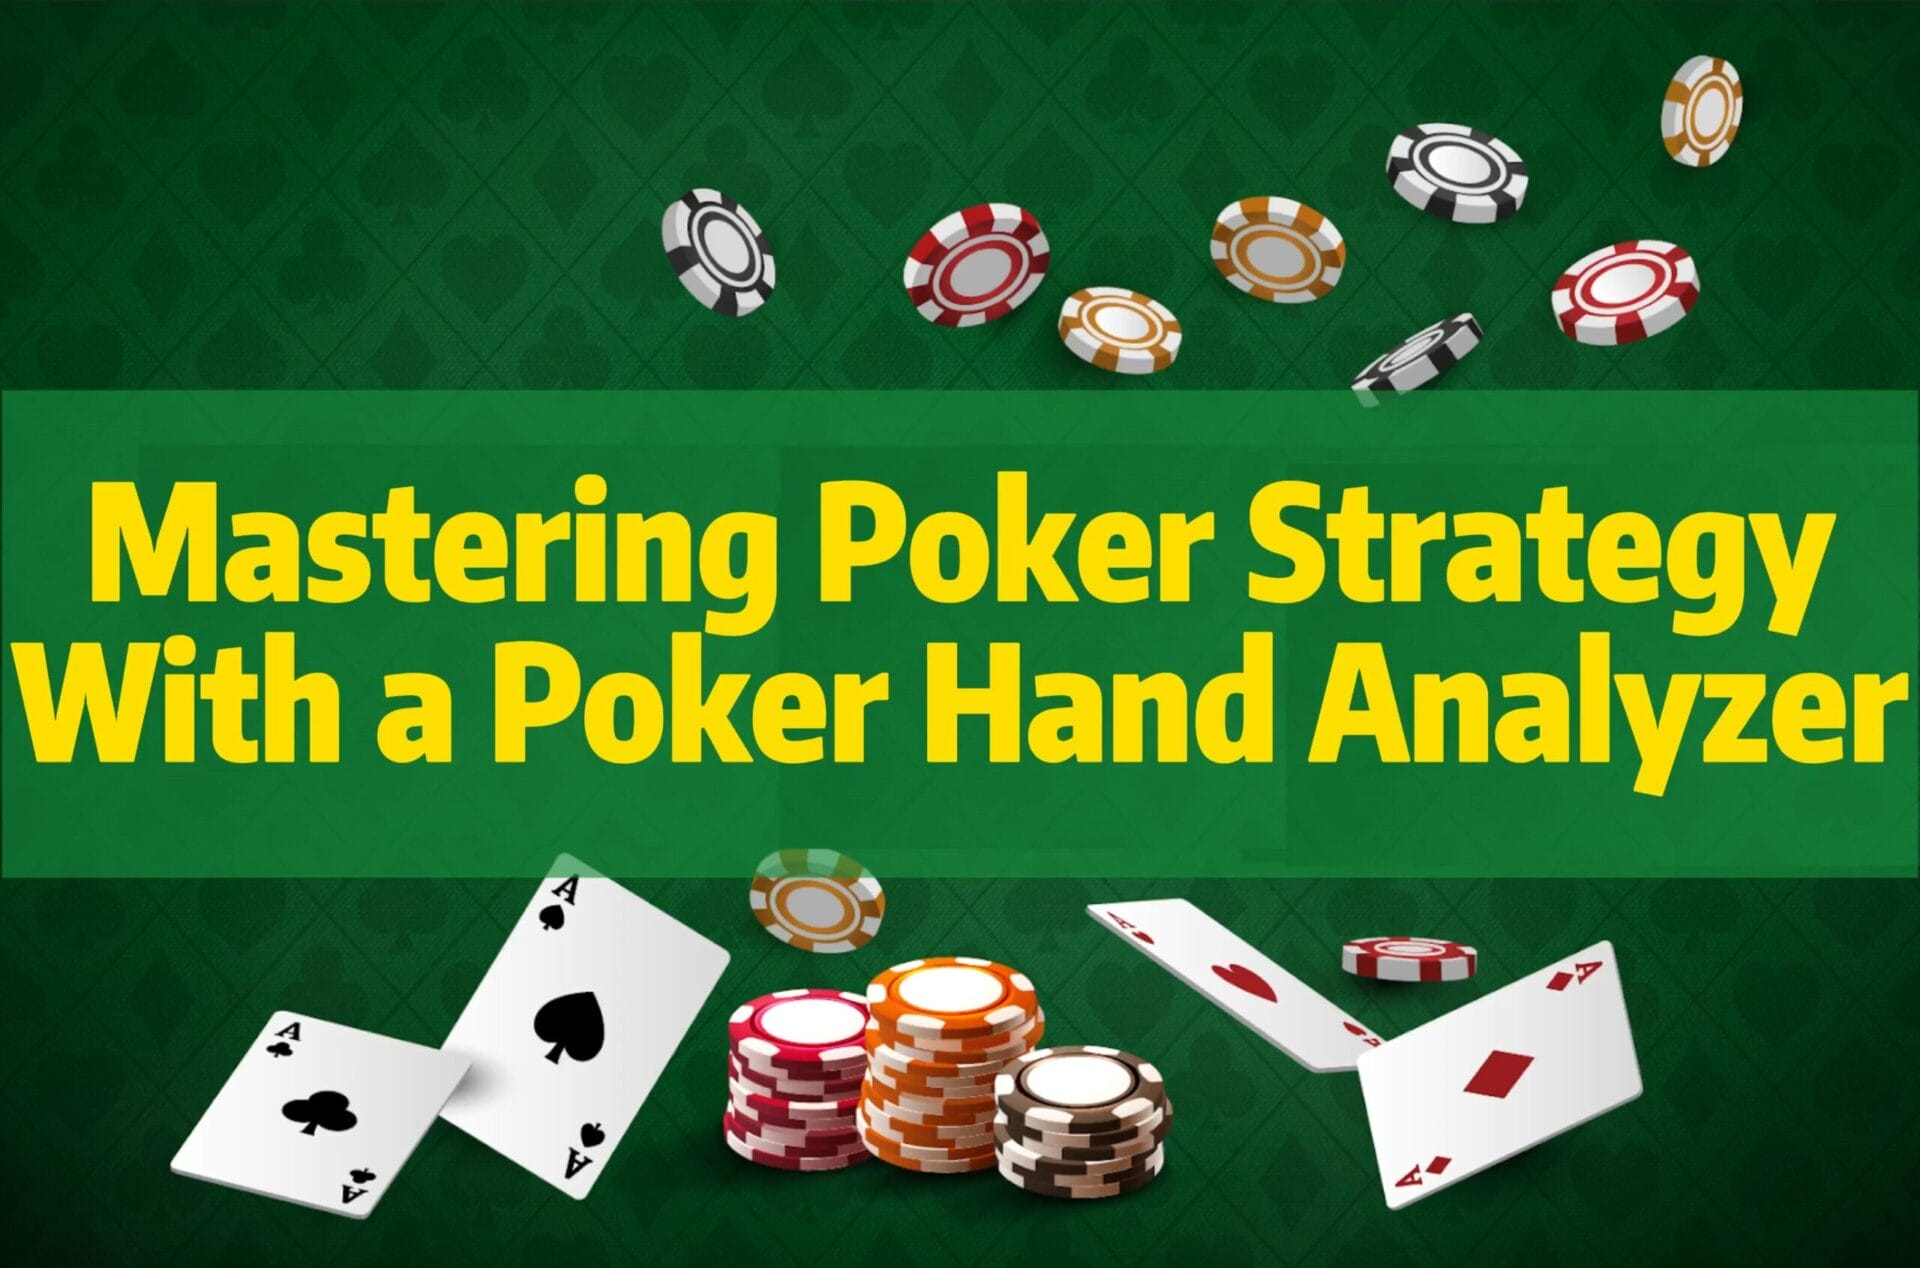 Mastering Poker Strategy With a Poker Hand Analyzer